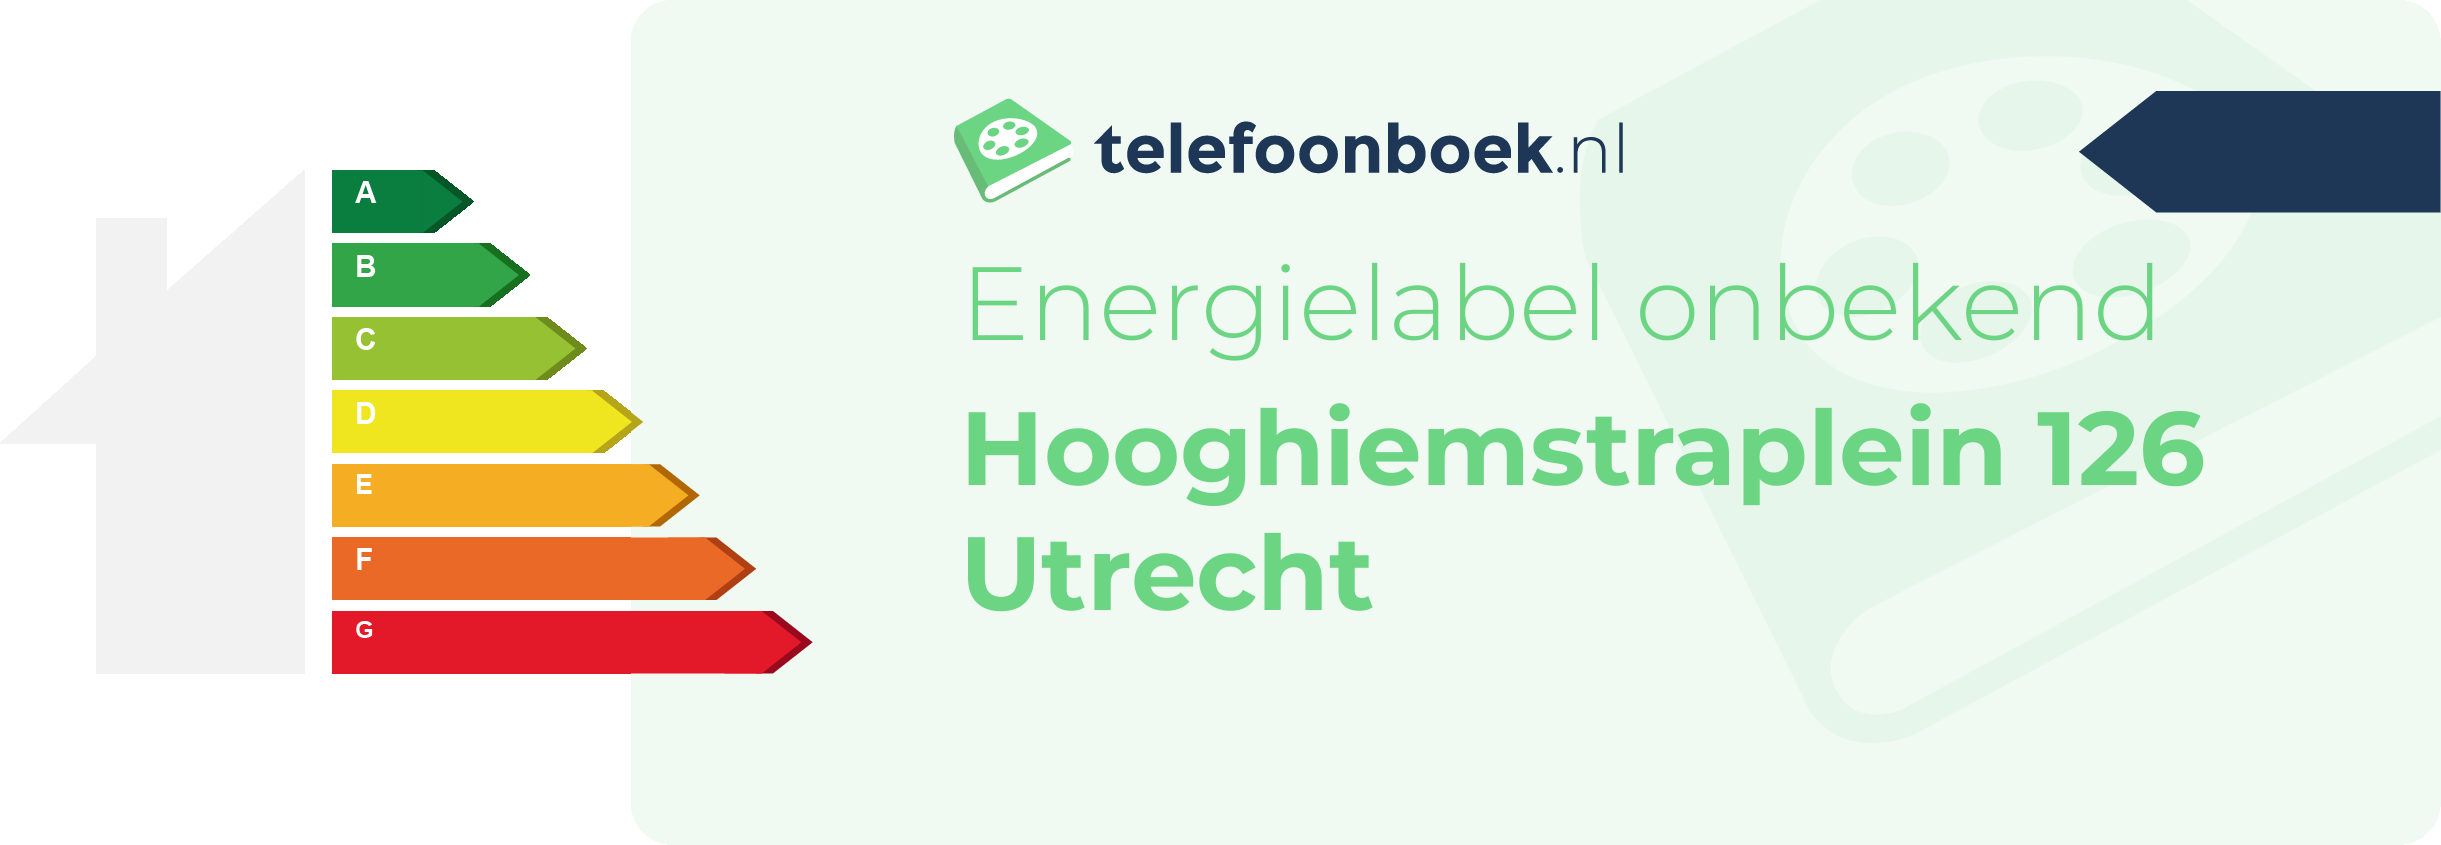 Energielabel Hooghiemstraplein 126 Utrecht